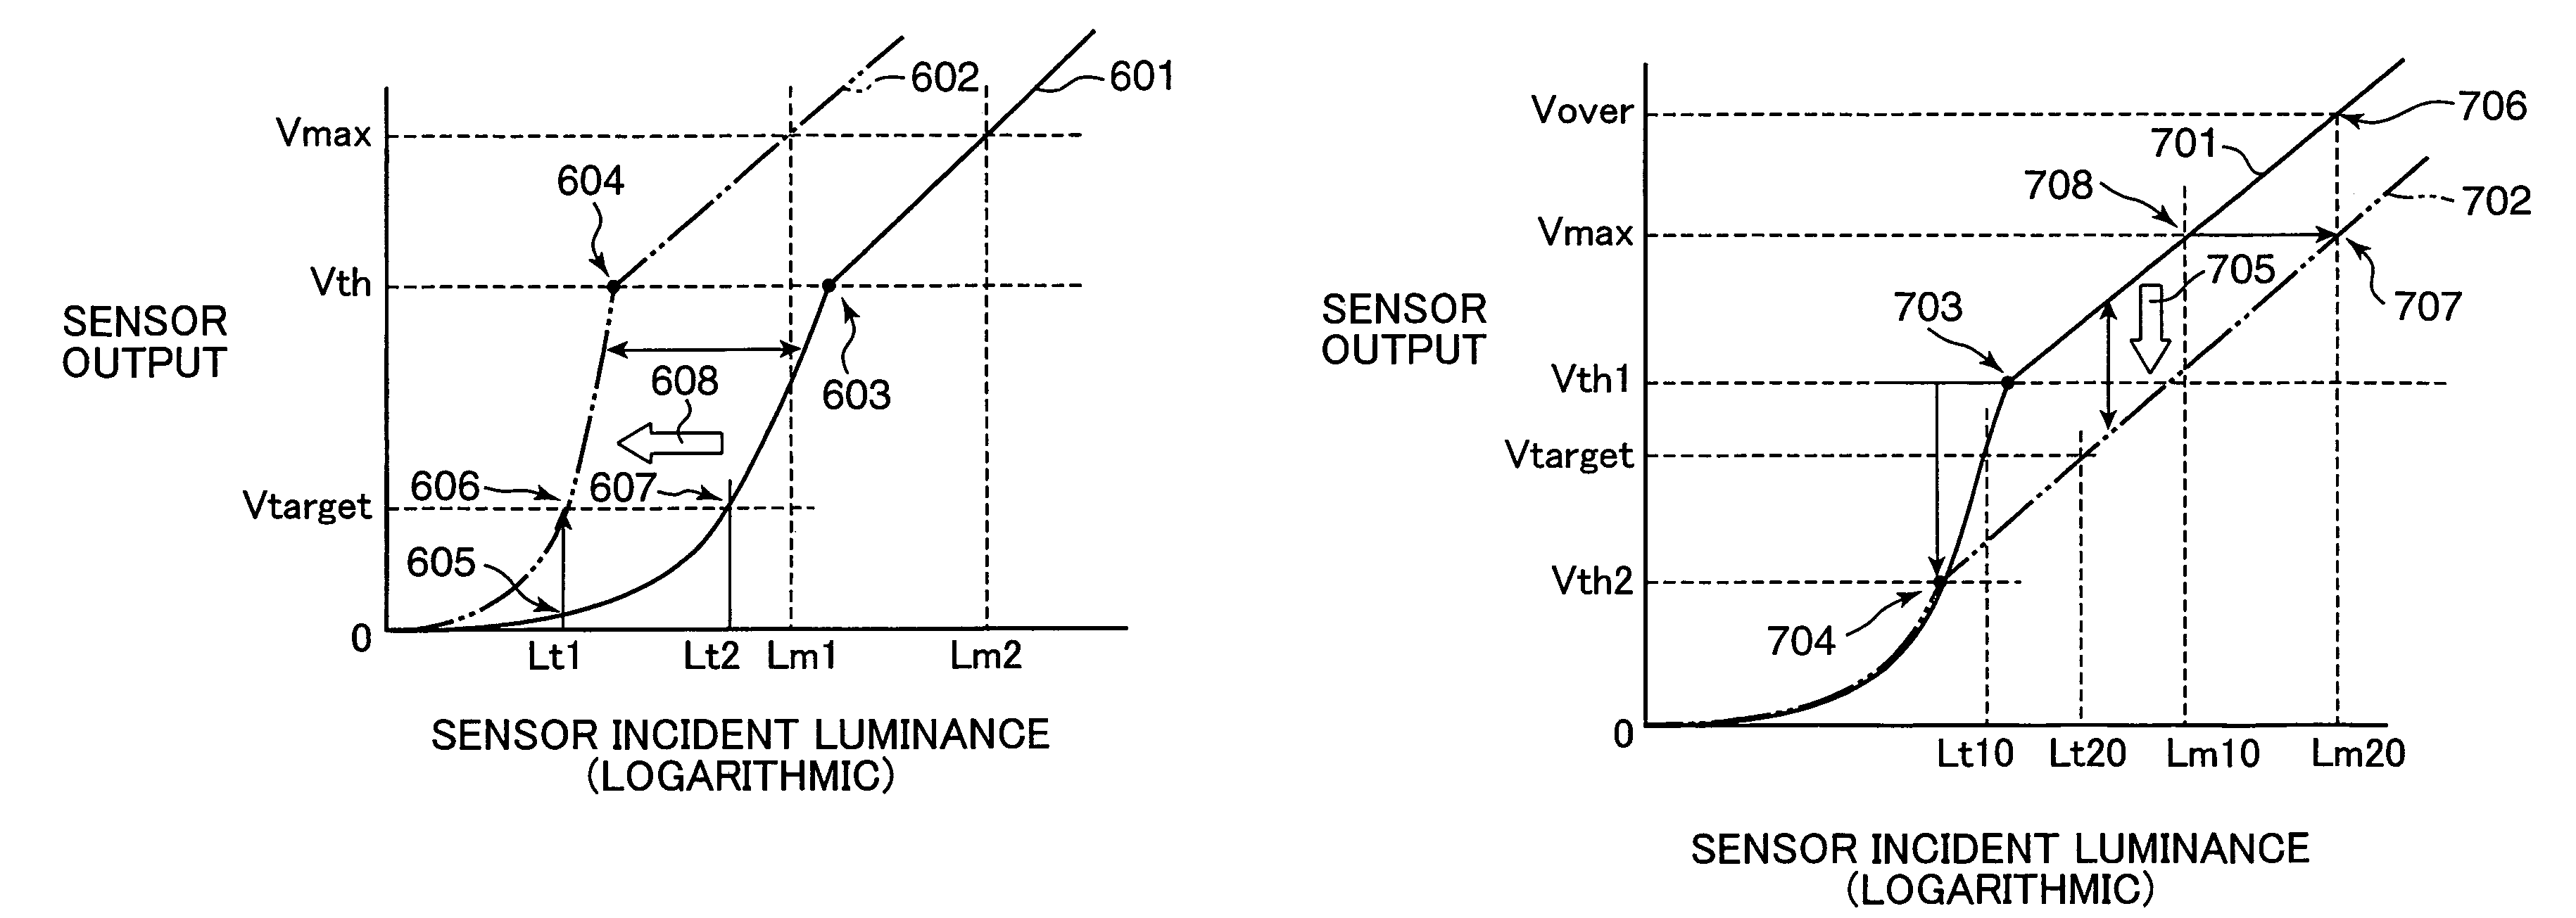 Image sensing apparatus and an image sensing method comprising a logarithmic characteristic area and a linear characteristic area